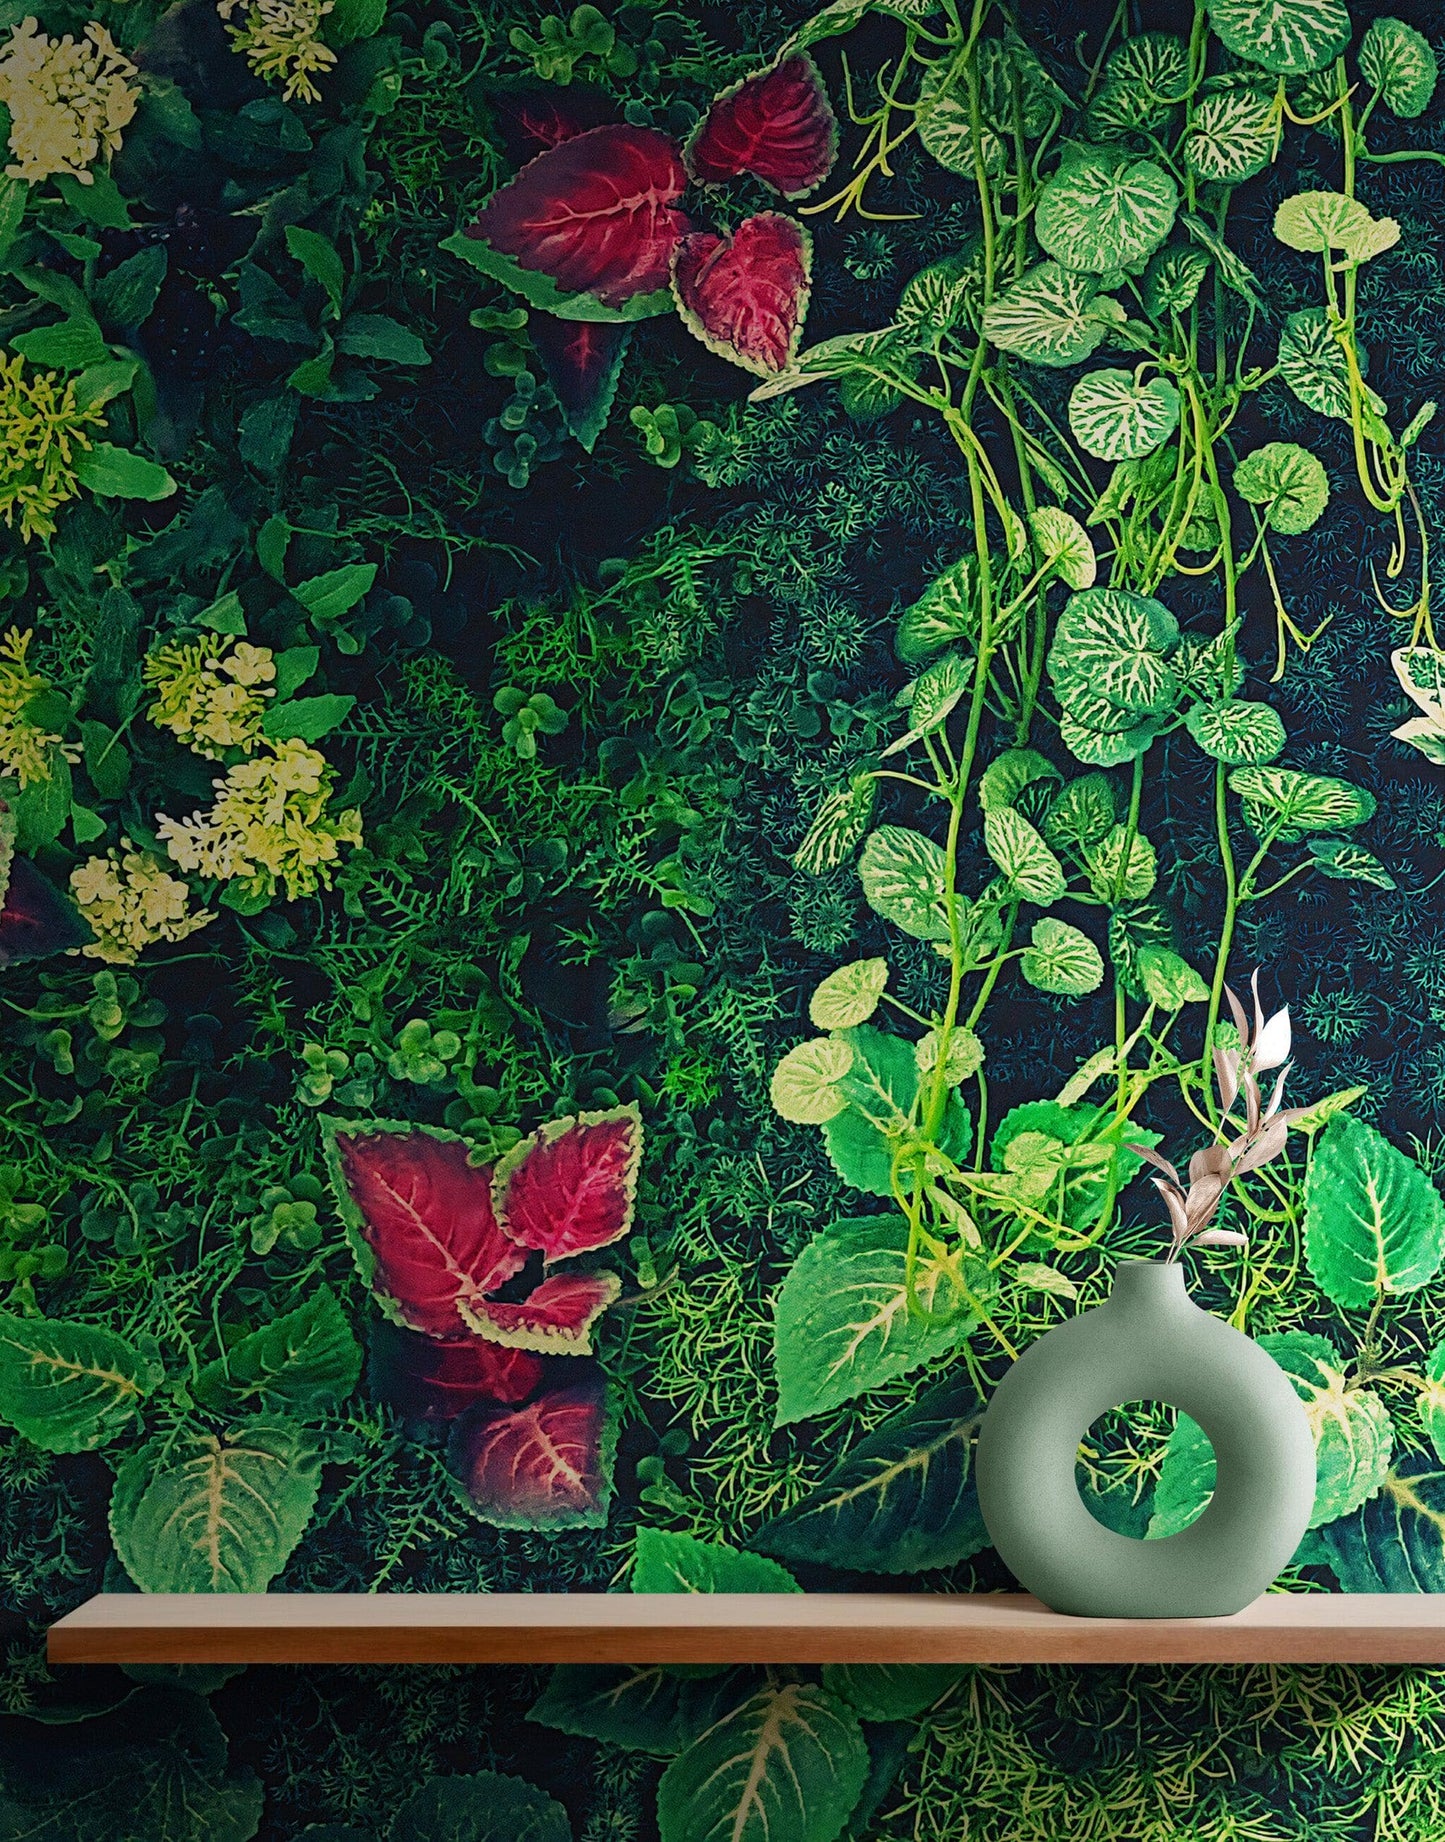 Greenery Jungle Bush Wallpaper Mural. Tropical Leaves / Fern Wallpaper. #6765